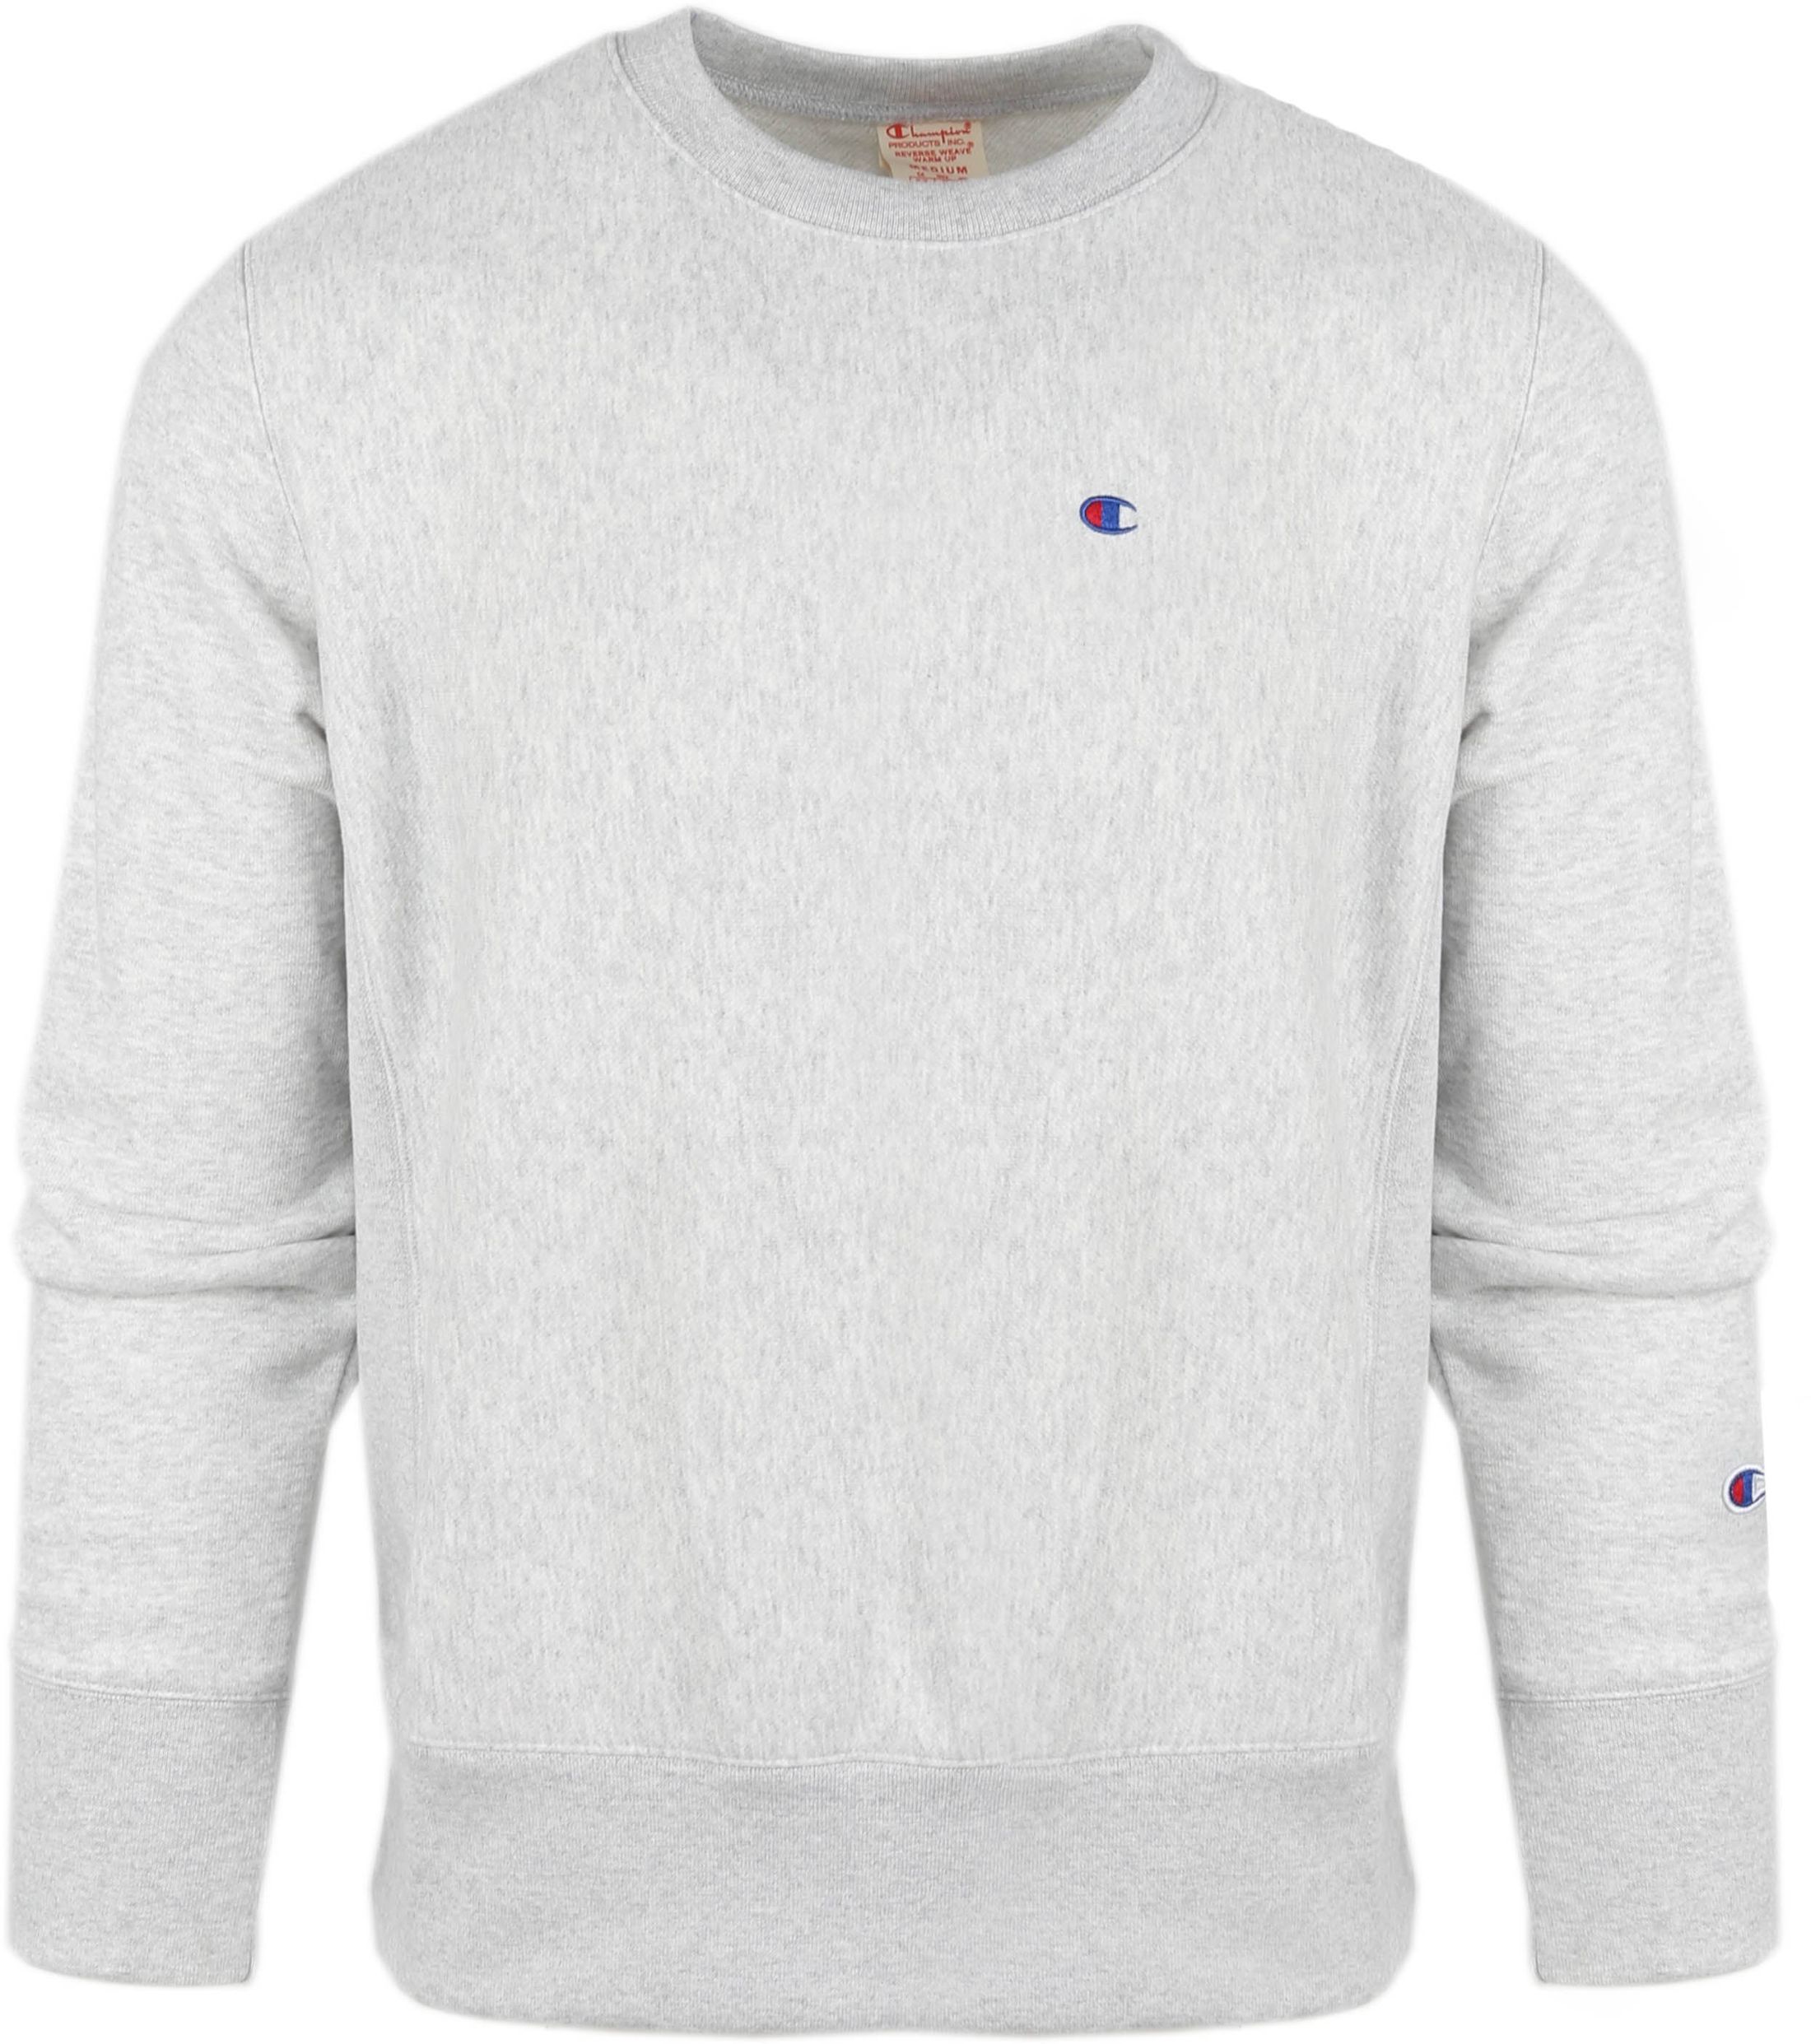 Champion Crewneck Sweater Light Gray Grey size L